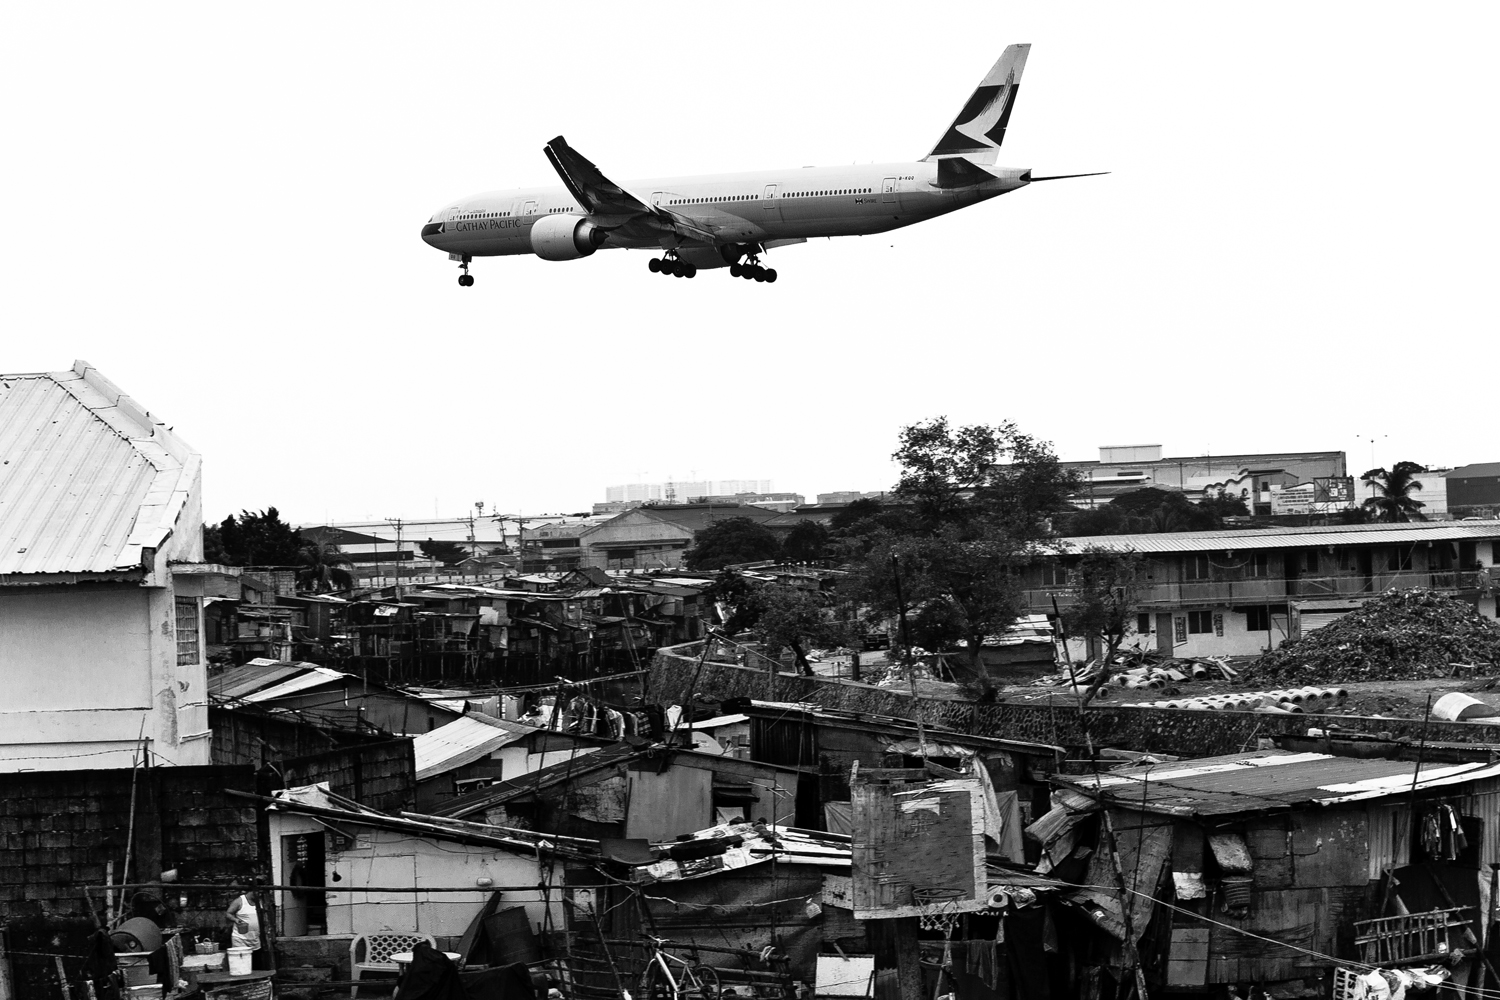 www.im-in-manila.jimdo.com - Landing over the city